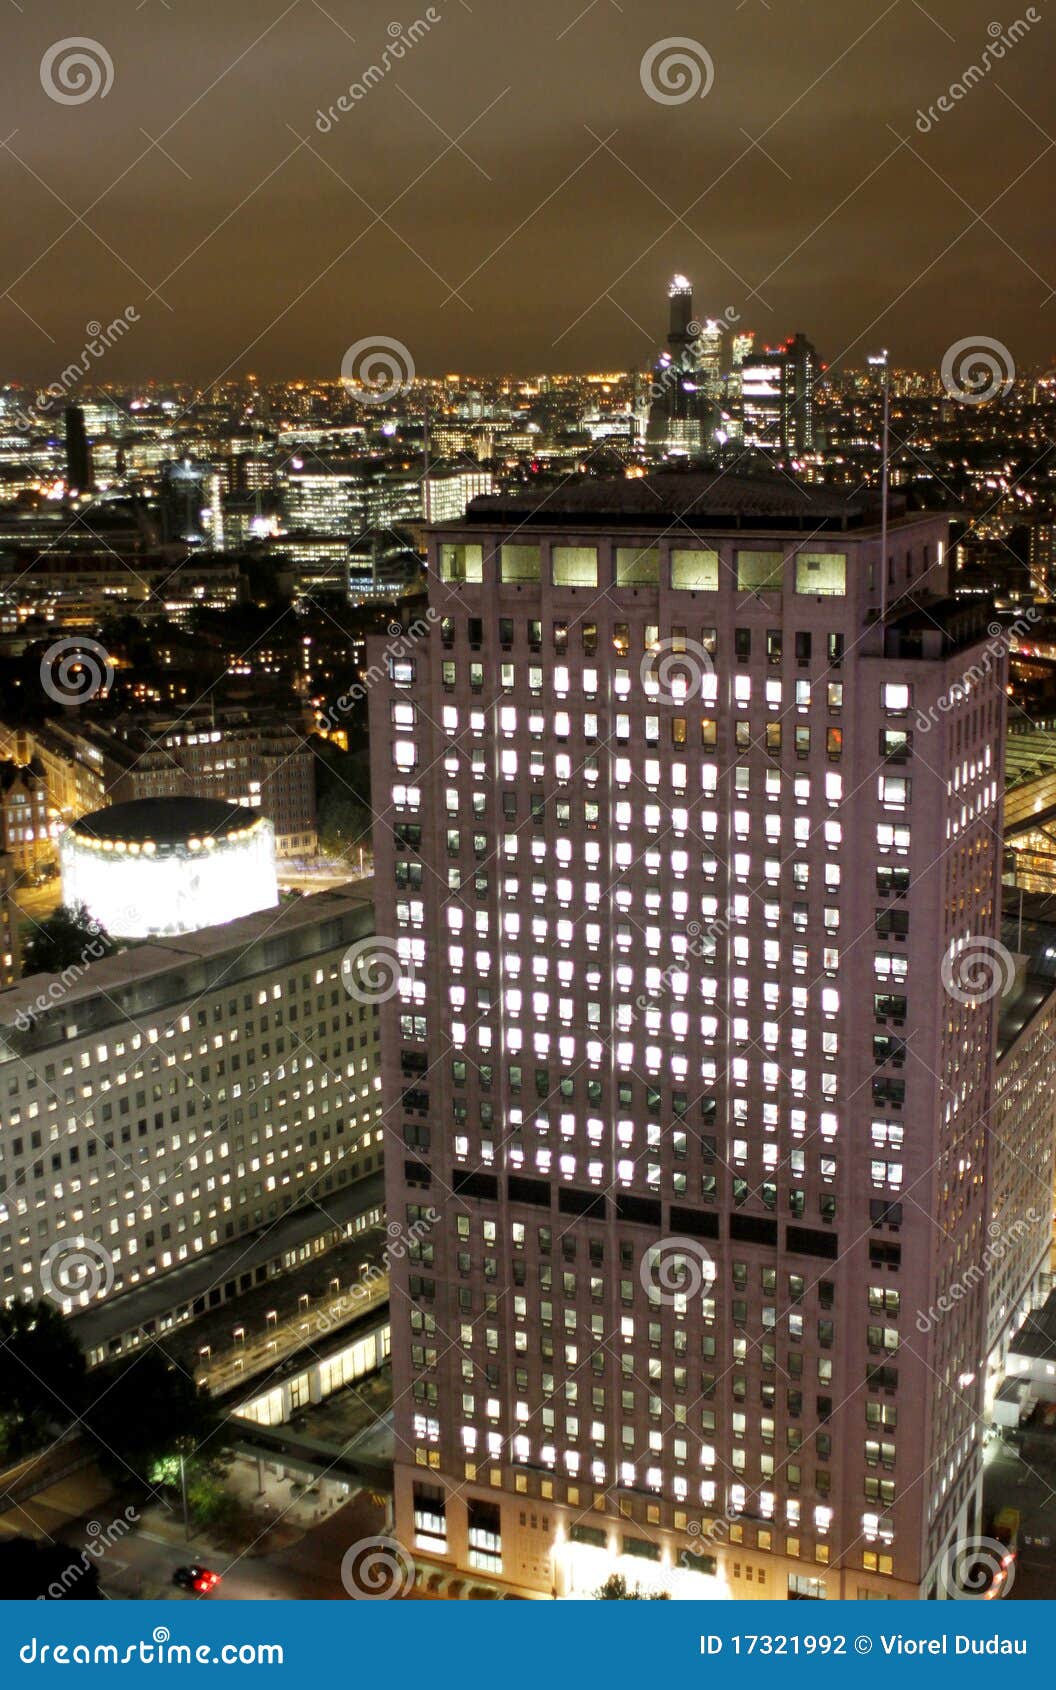 london night scene, canary wharf office buildings